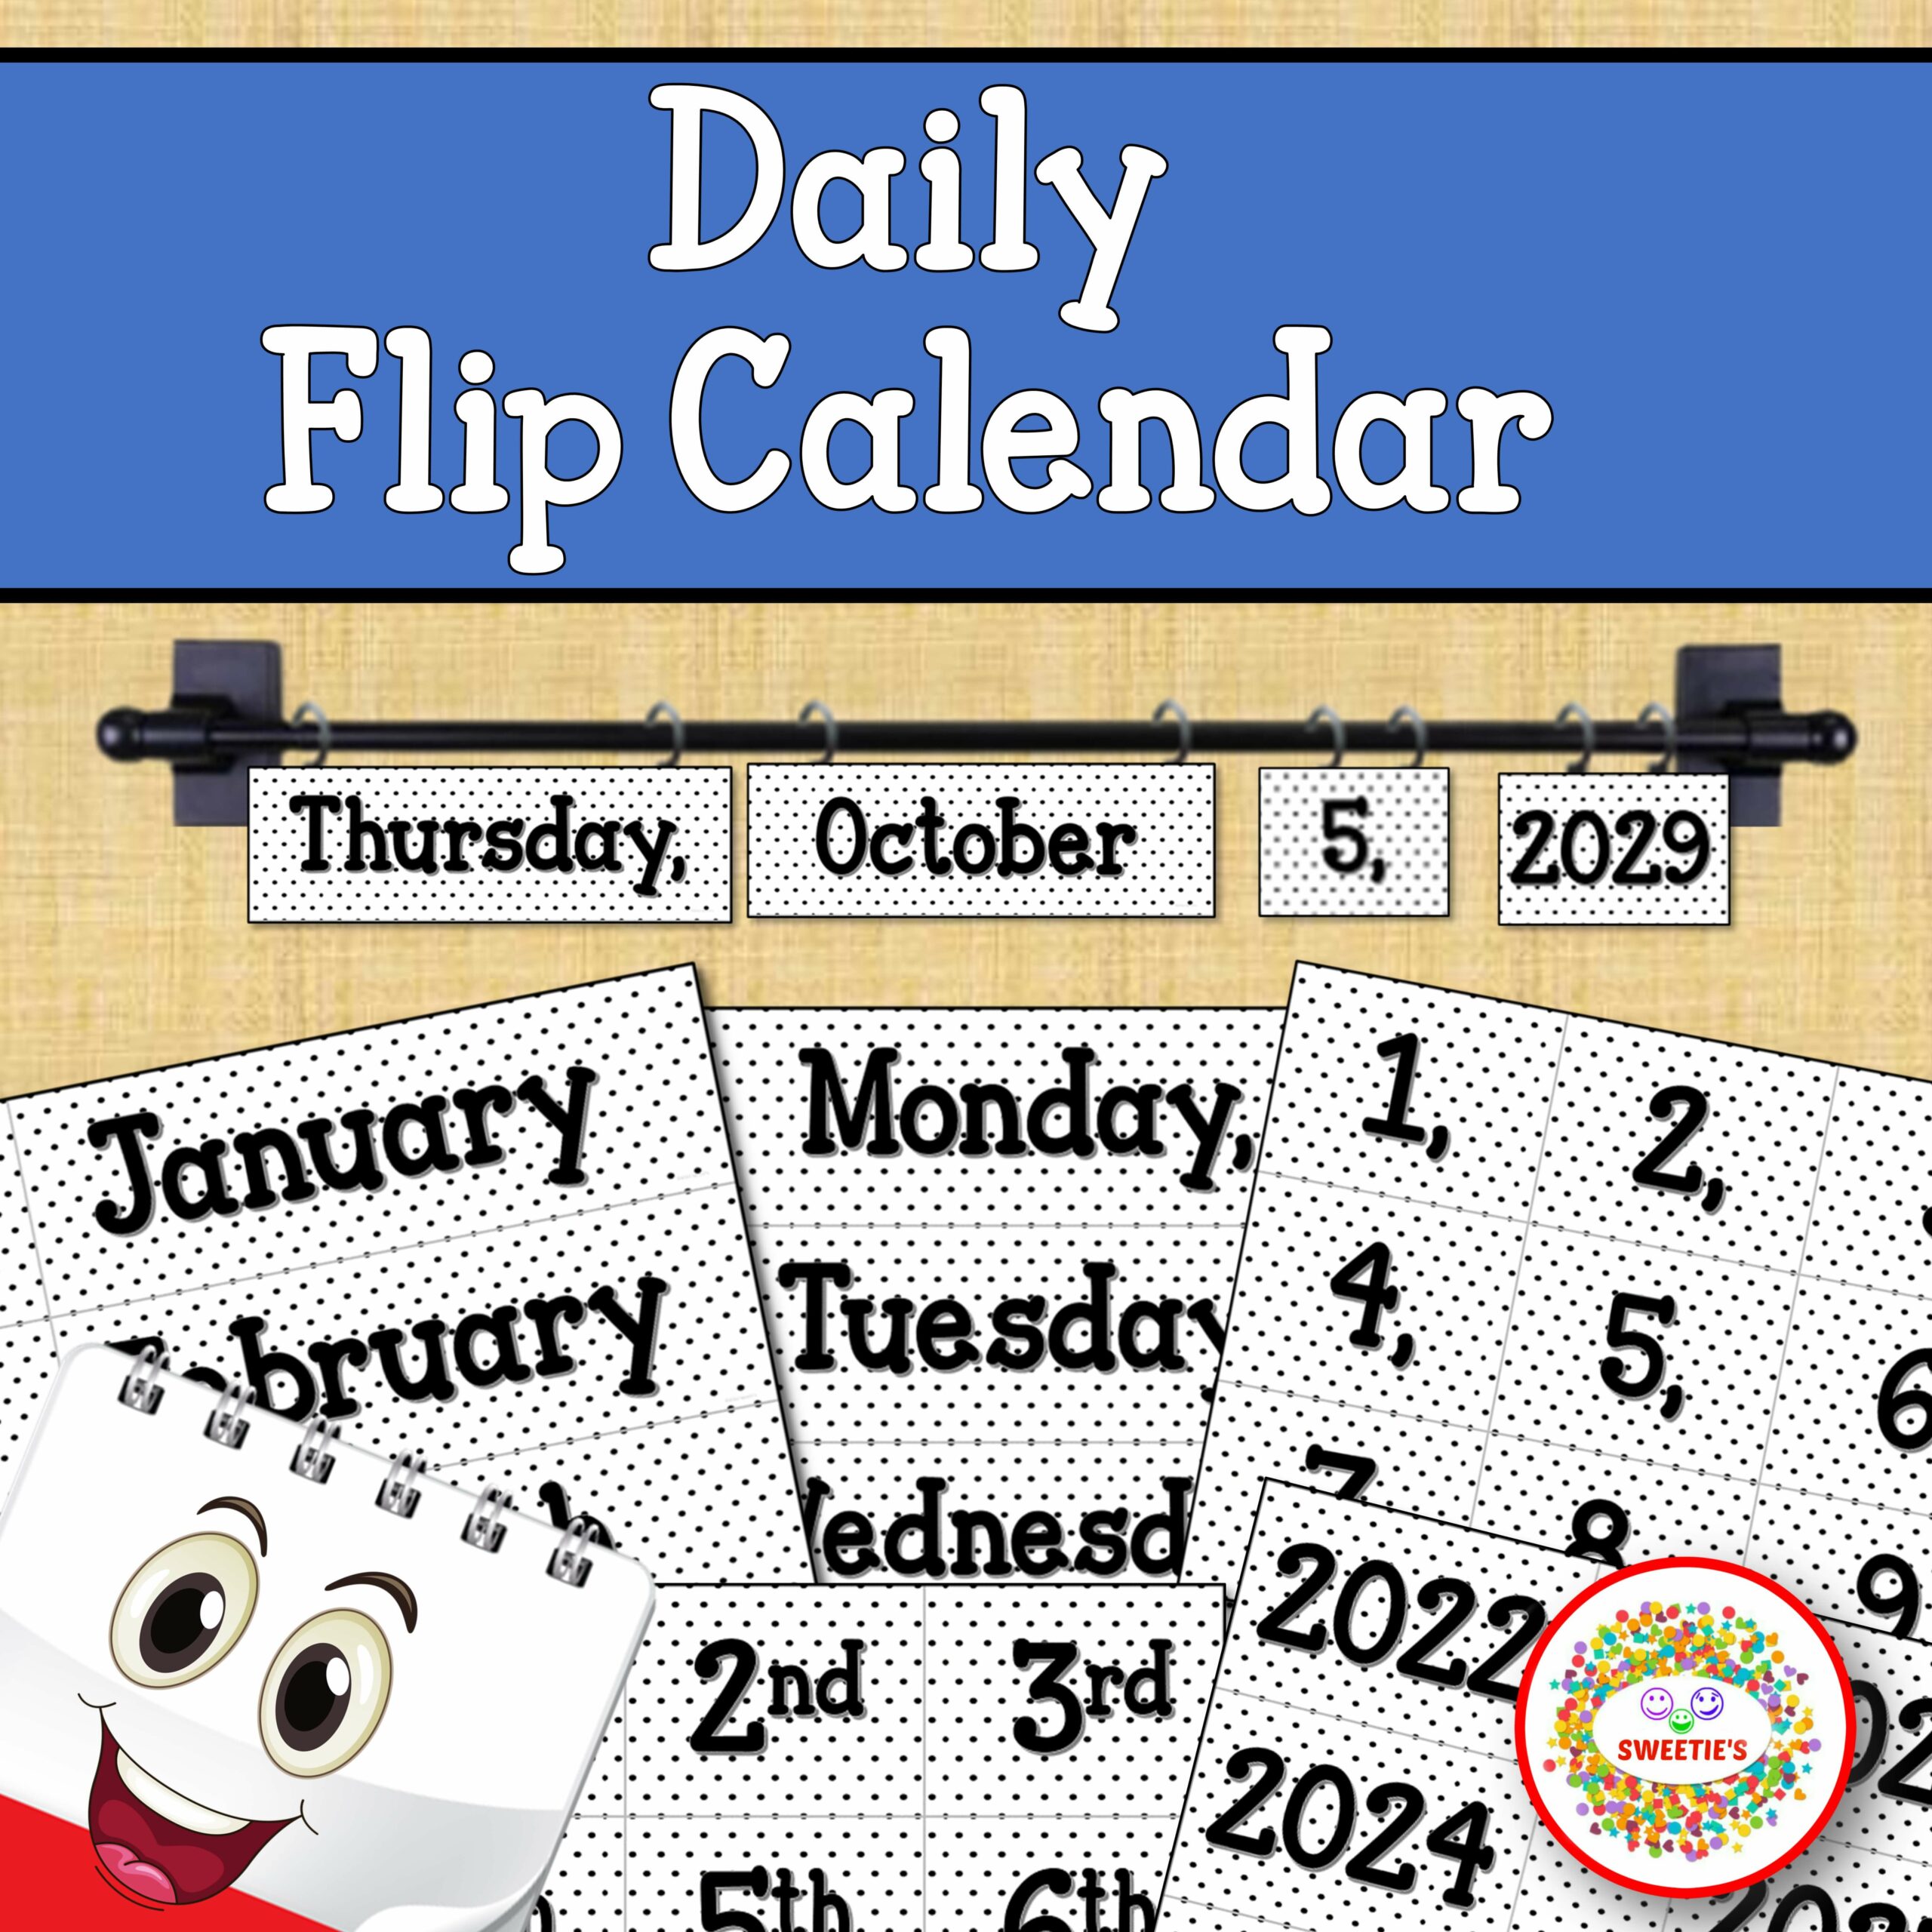 Daily Flip Calendar 2022 to 2051 Black and White Polka Dot Theme